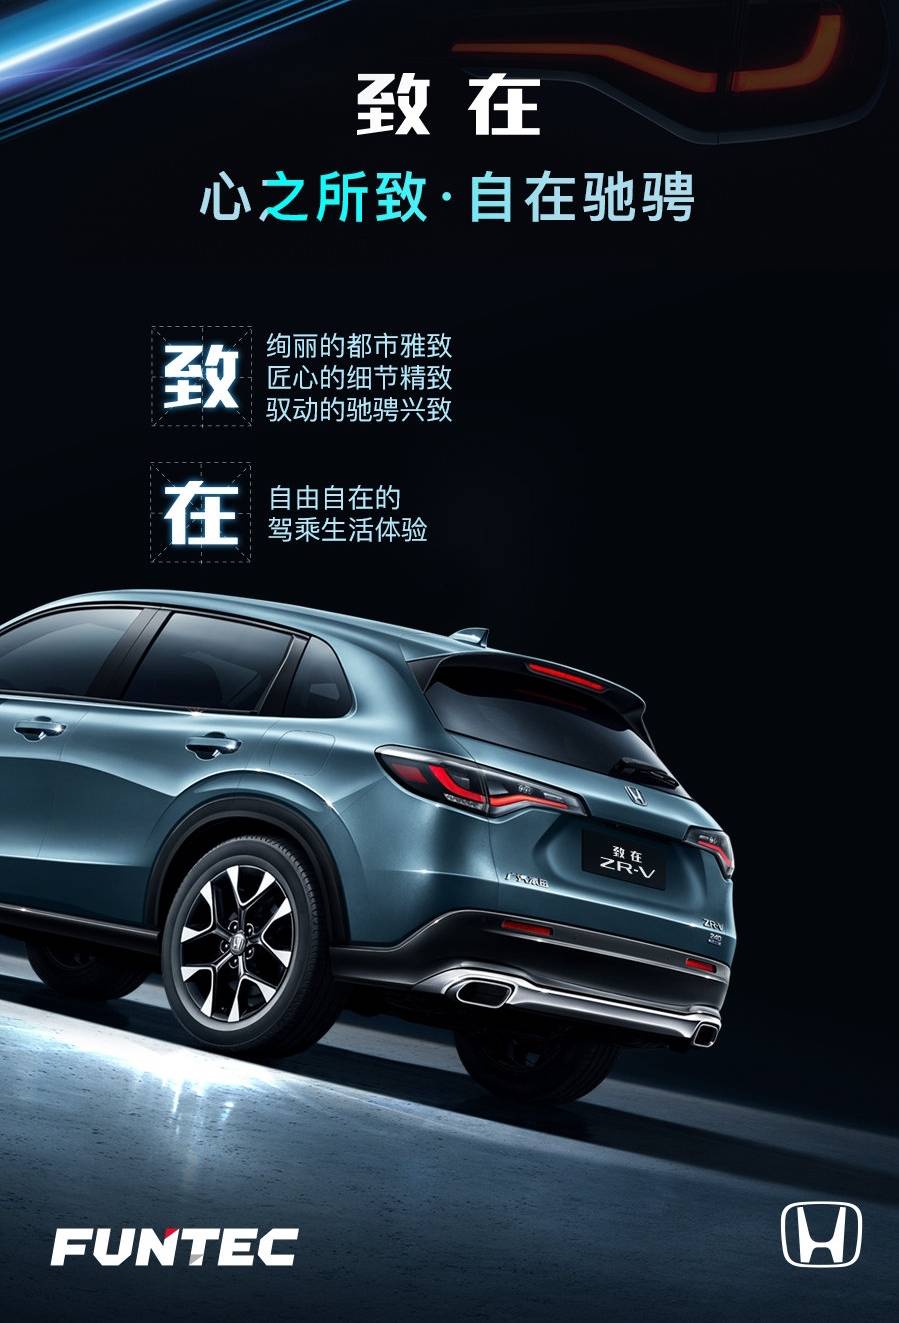 honda3 - Tesla potrebbe costruire una seconda fabbrica a Shanghai / L’ingegnere senior Ford si unisce ad Apple Car / GAC Honda porta un nuovo SUV